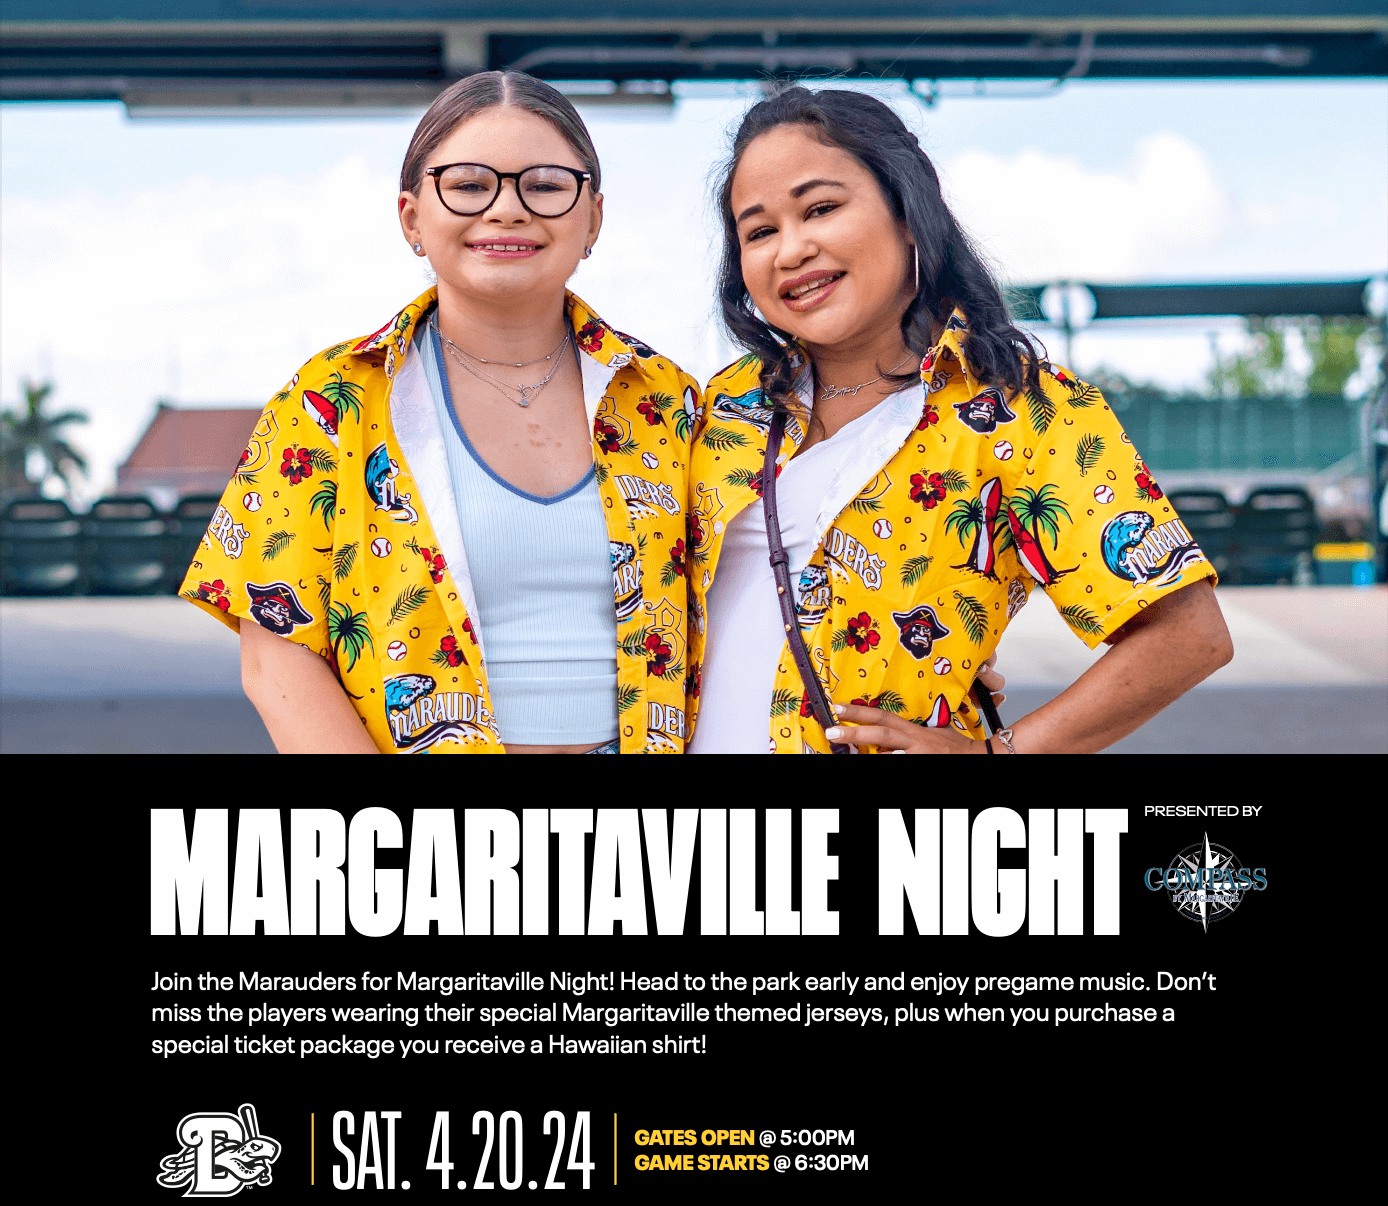 margaritaville night promo graphic with two women wearing hawaiian shirts